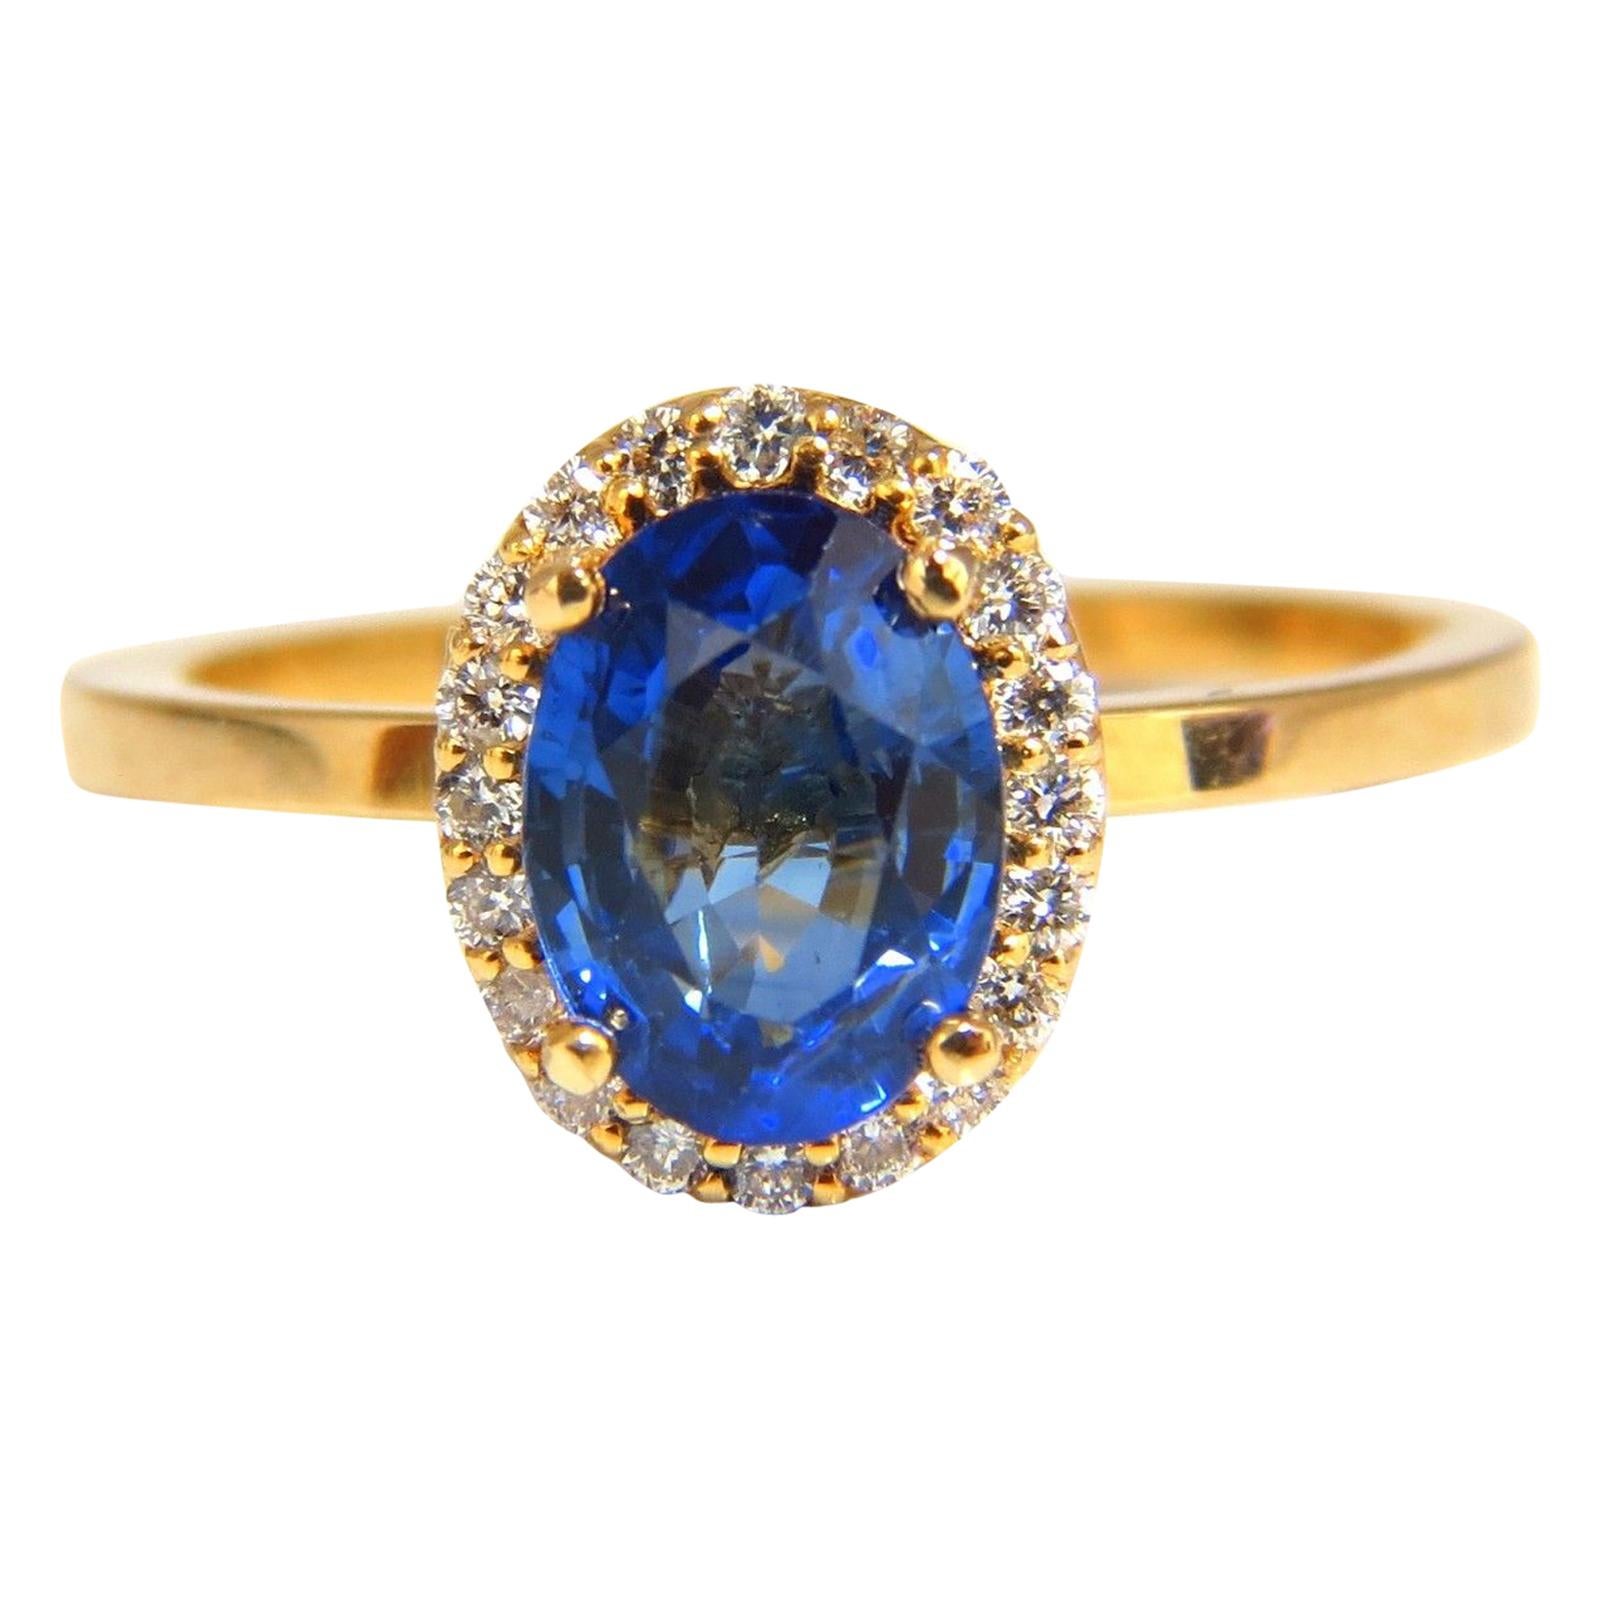 2.18 Carat Natural Vivid Blue Sapphire Diamonds Ring 18 Karat Petite Halo